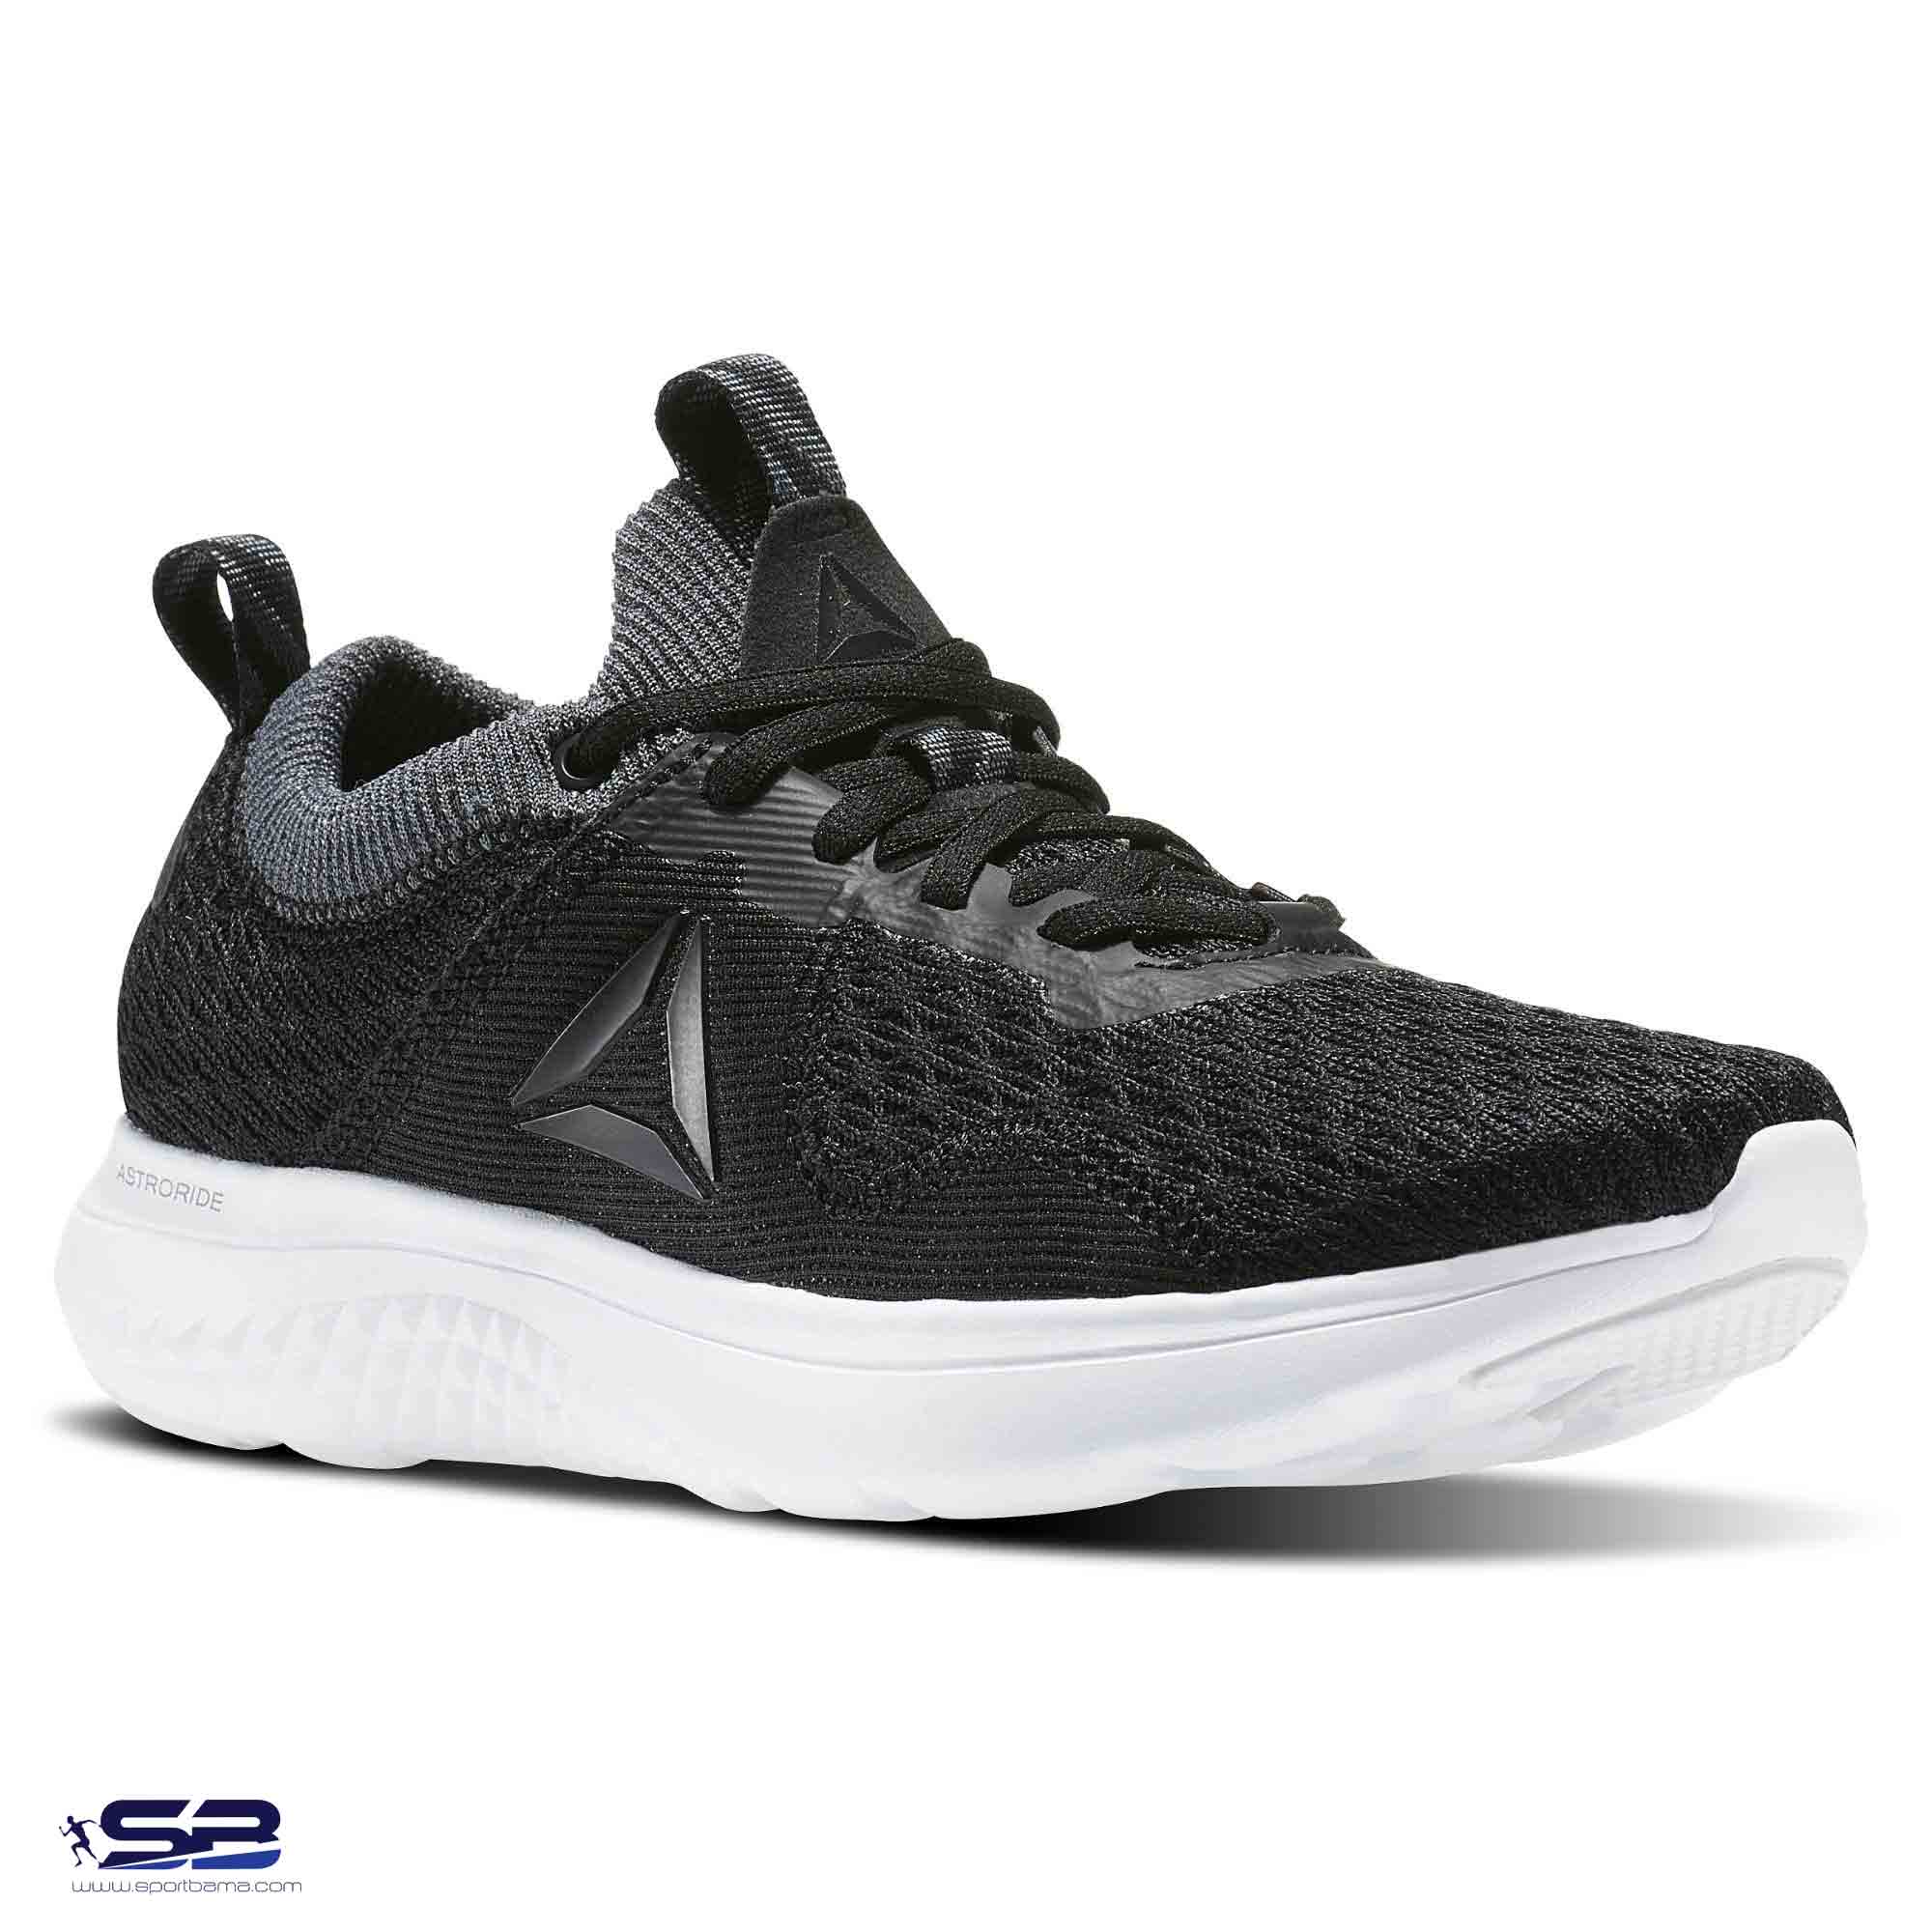  خرید  کفش کتانی اورجینال ریباک     Reebok Running Shoes BS5500  